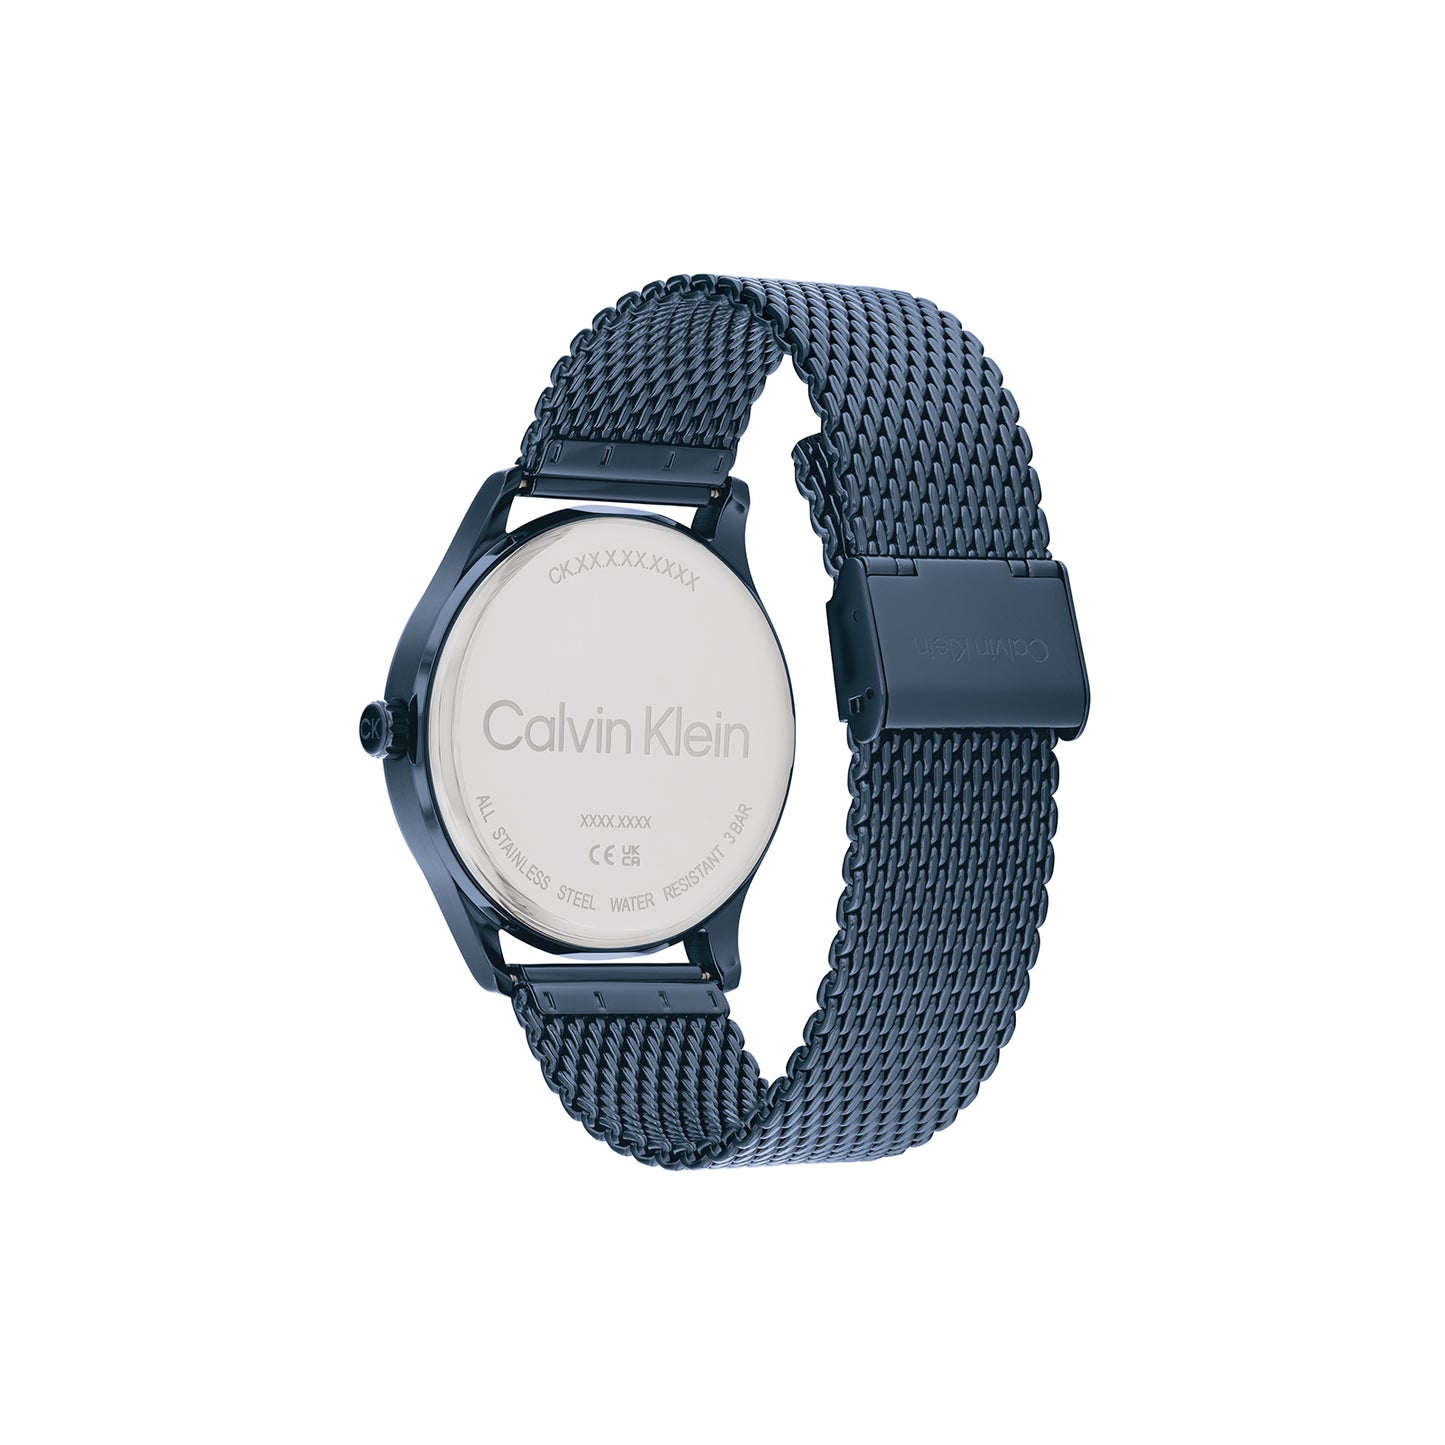 Calvin Klein 25200451 Men's Ionic Plated Blue Steel Mesh Watch